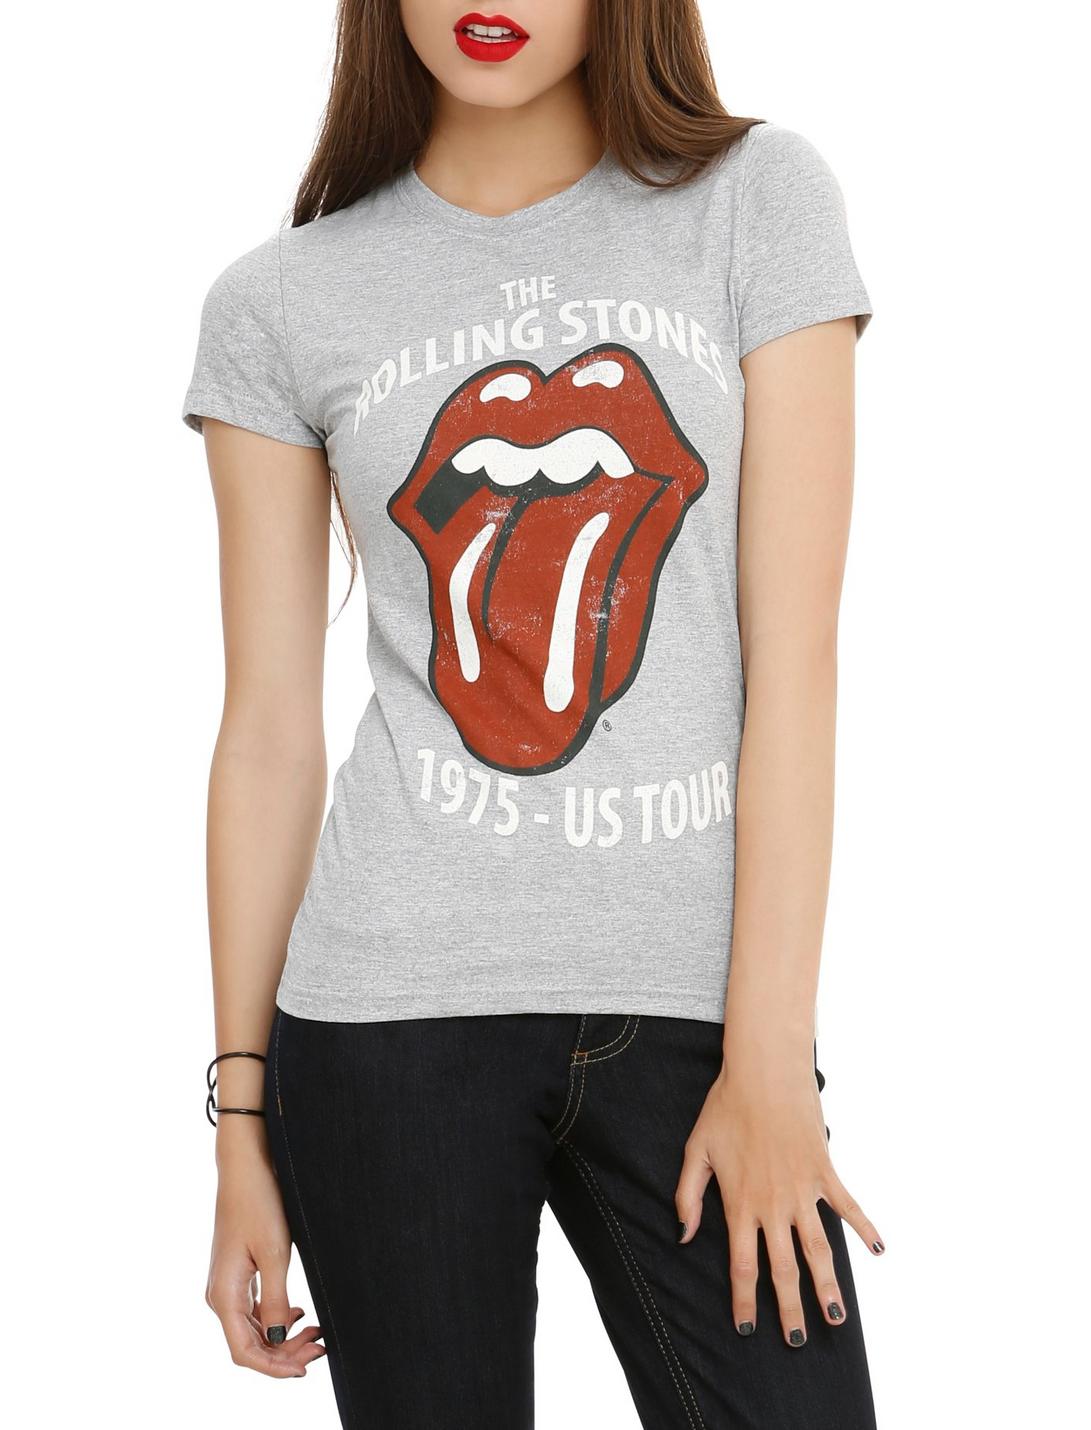 The Rolling Stones 1975 US Tour Girls T-Shirt, BLACK, hi-res